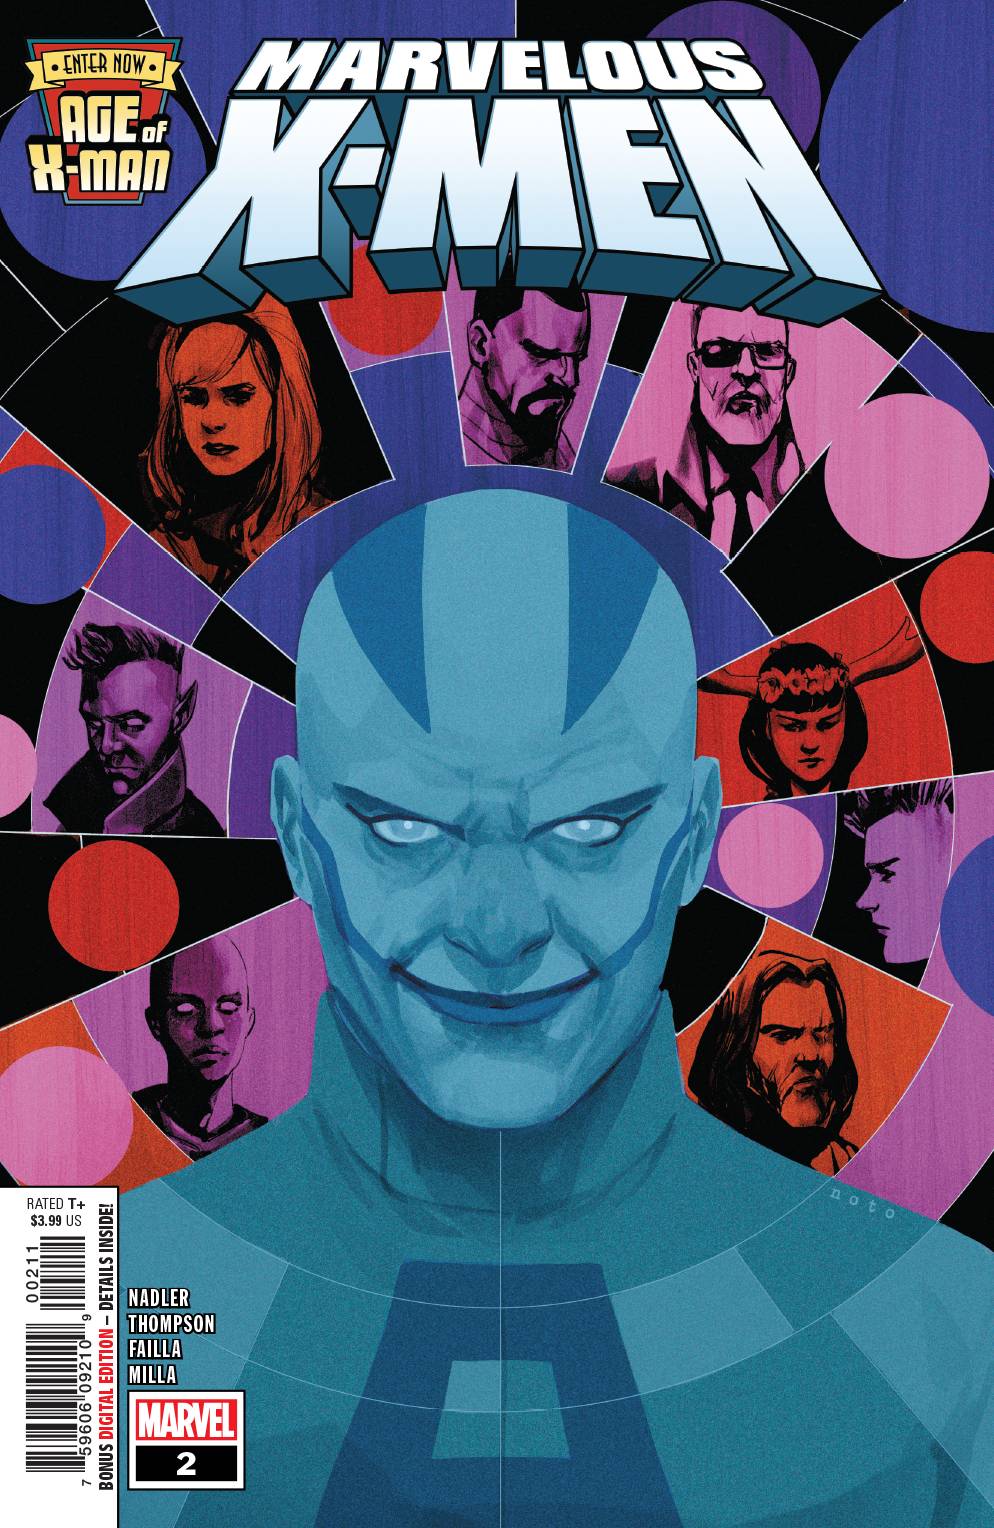 Age of X-Man Marvelous X-Men #2 (Of 5)